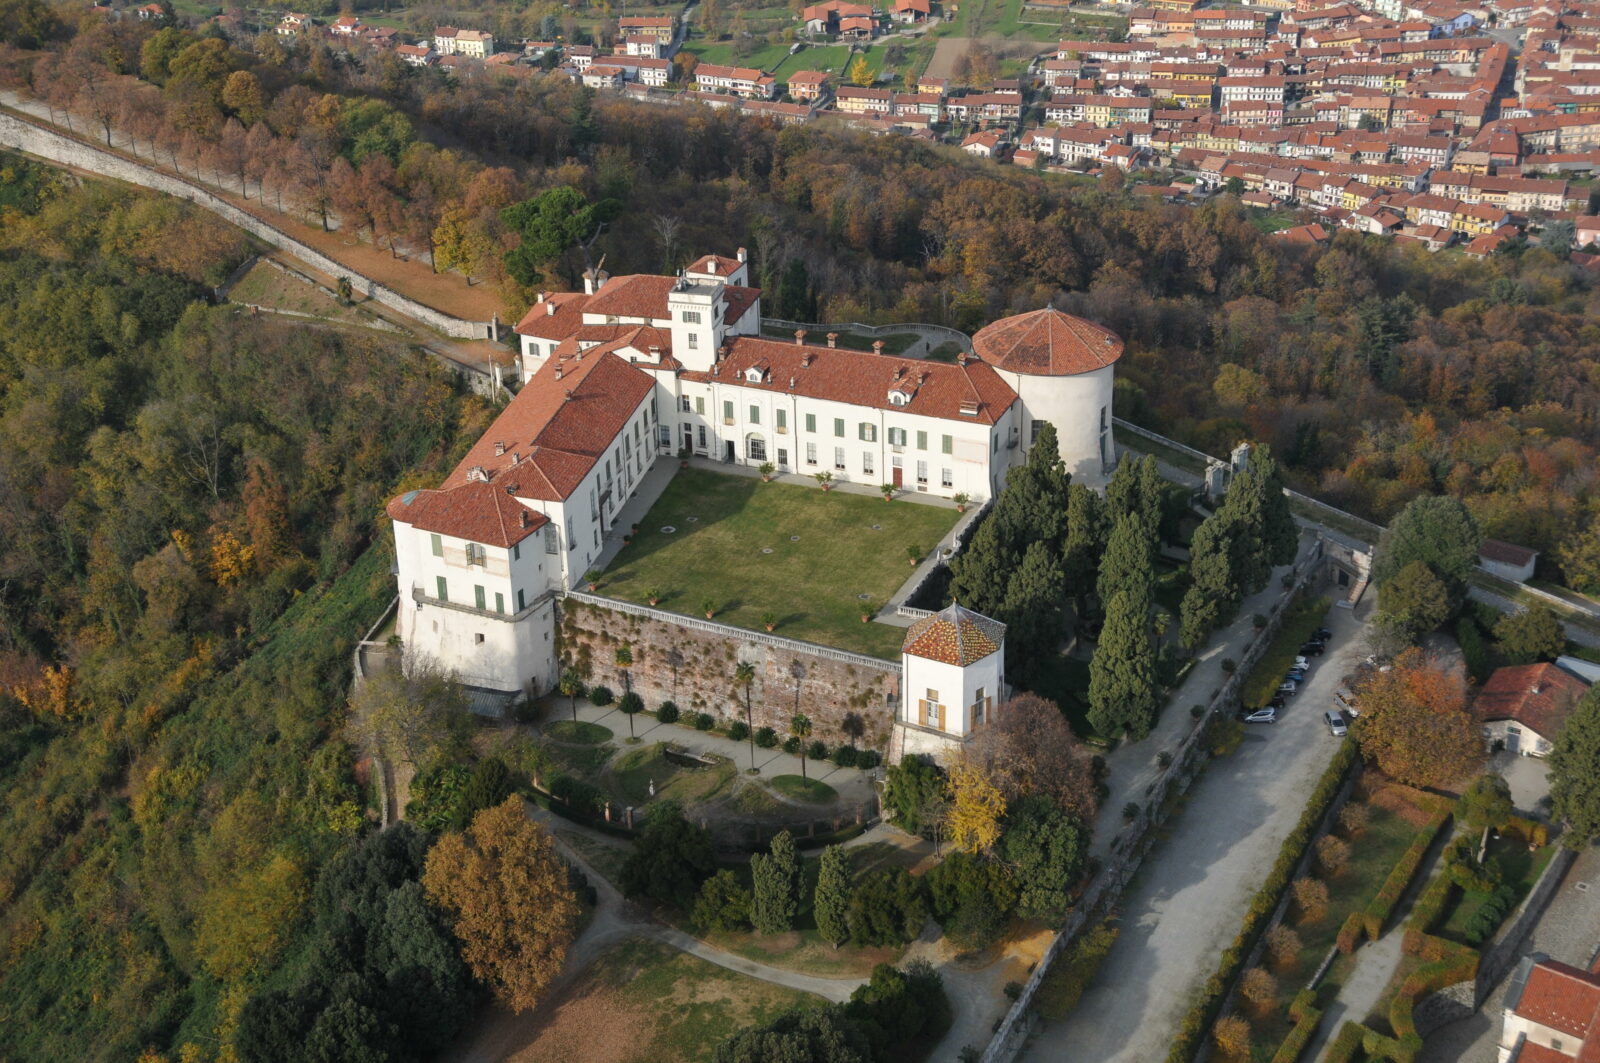 View of the Masino Castle